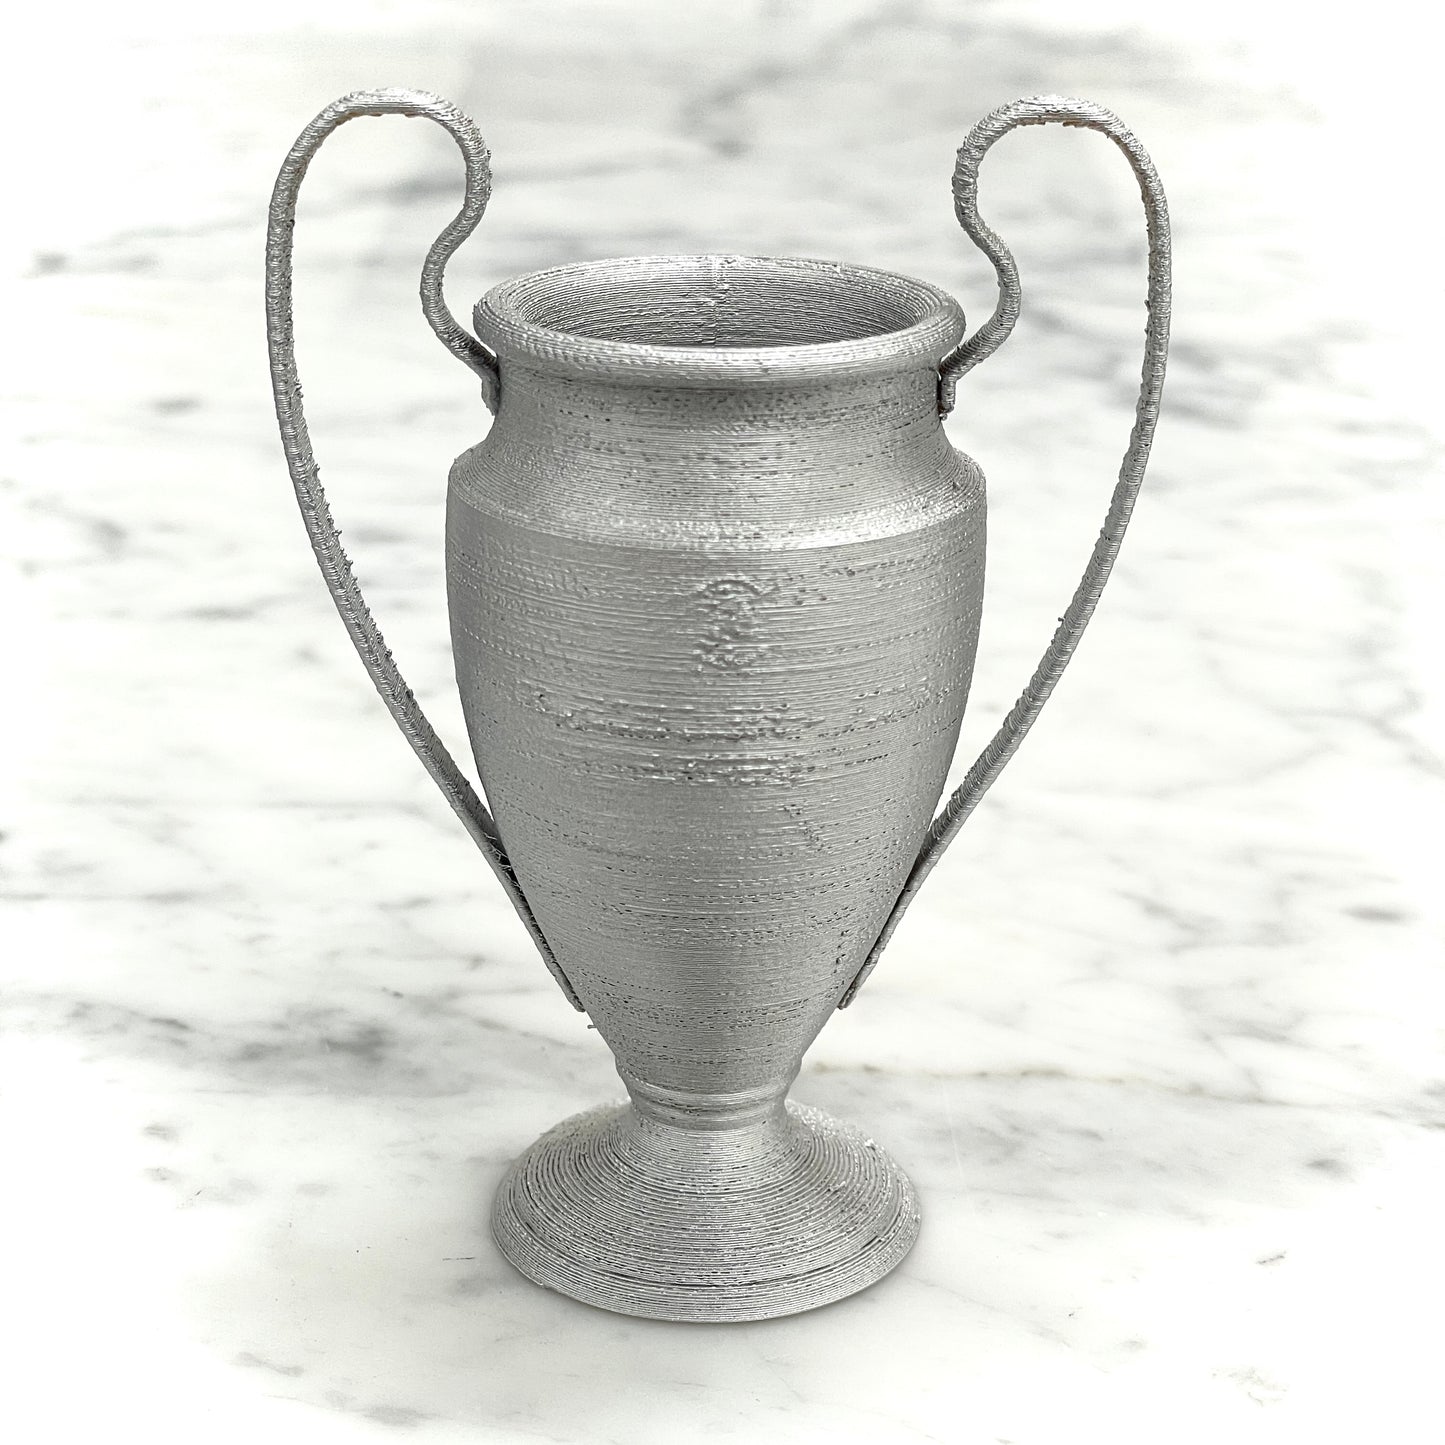 3D Printed Champions League Trophy